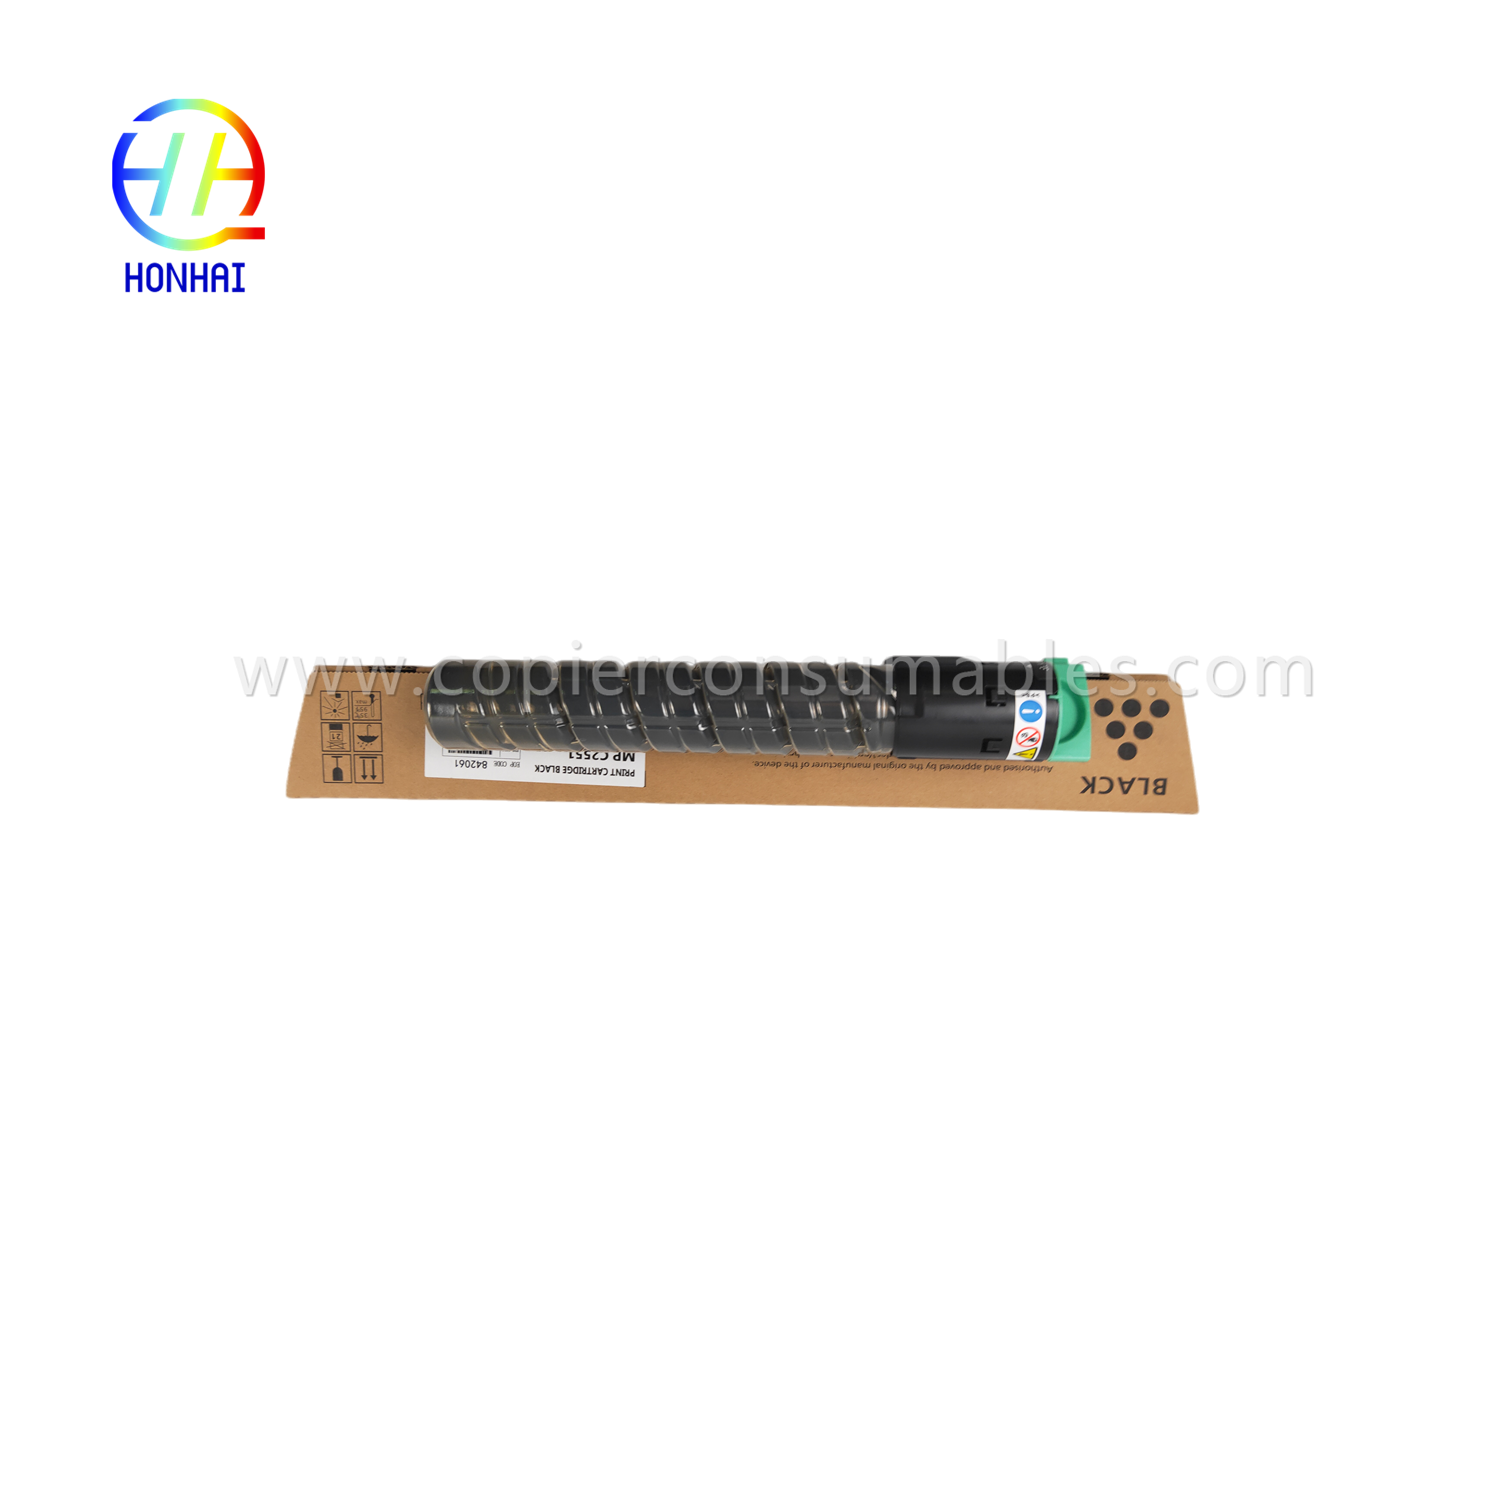 https://c585.goodao.net/toner-cartridge-black-for-ricoh-842061-mpc2051-mpc2551-product/